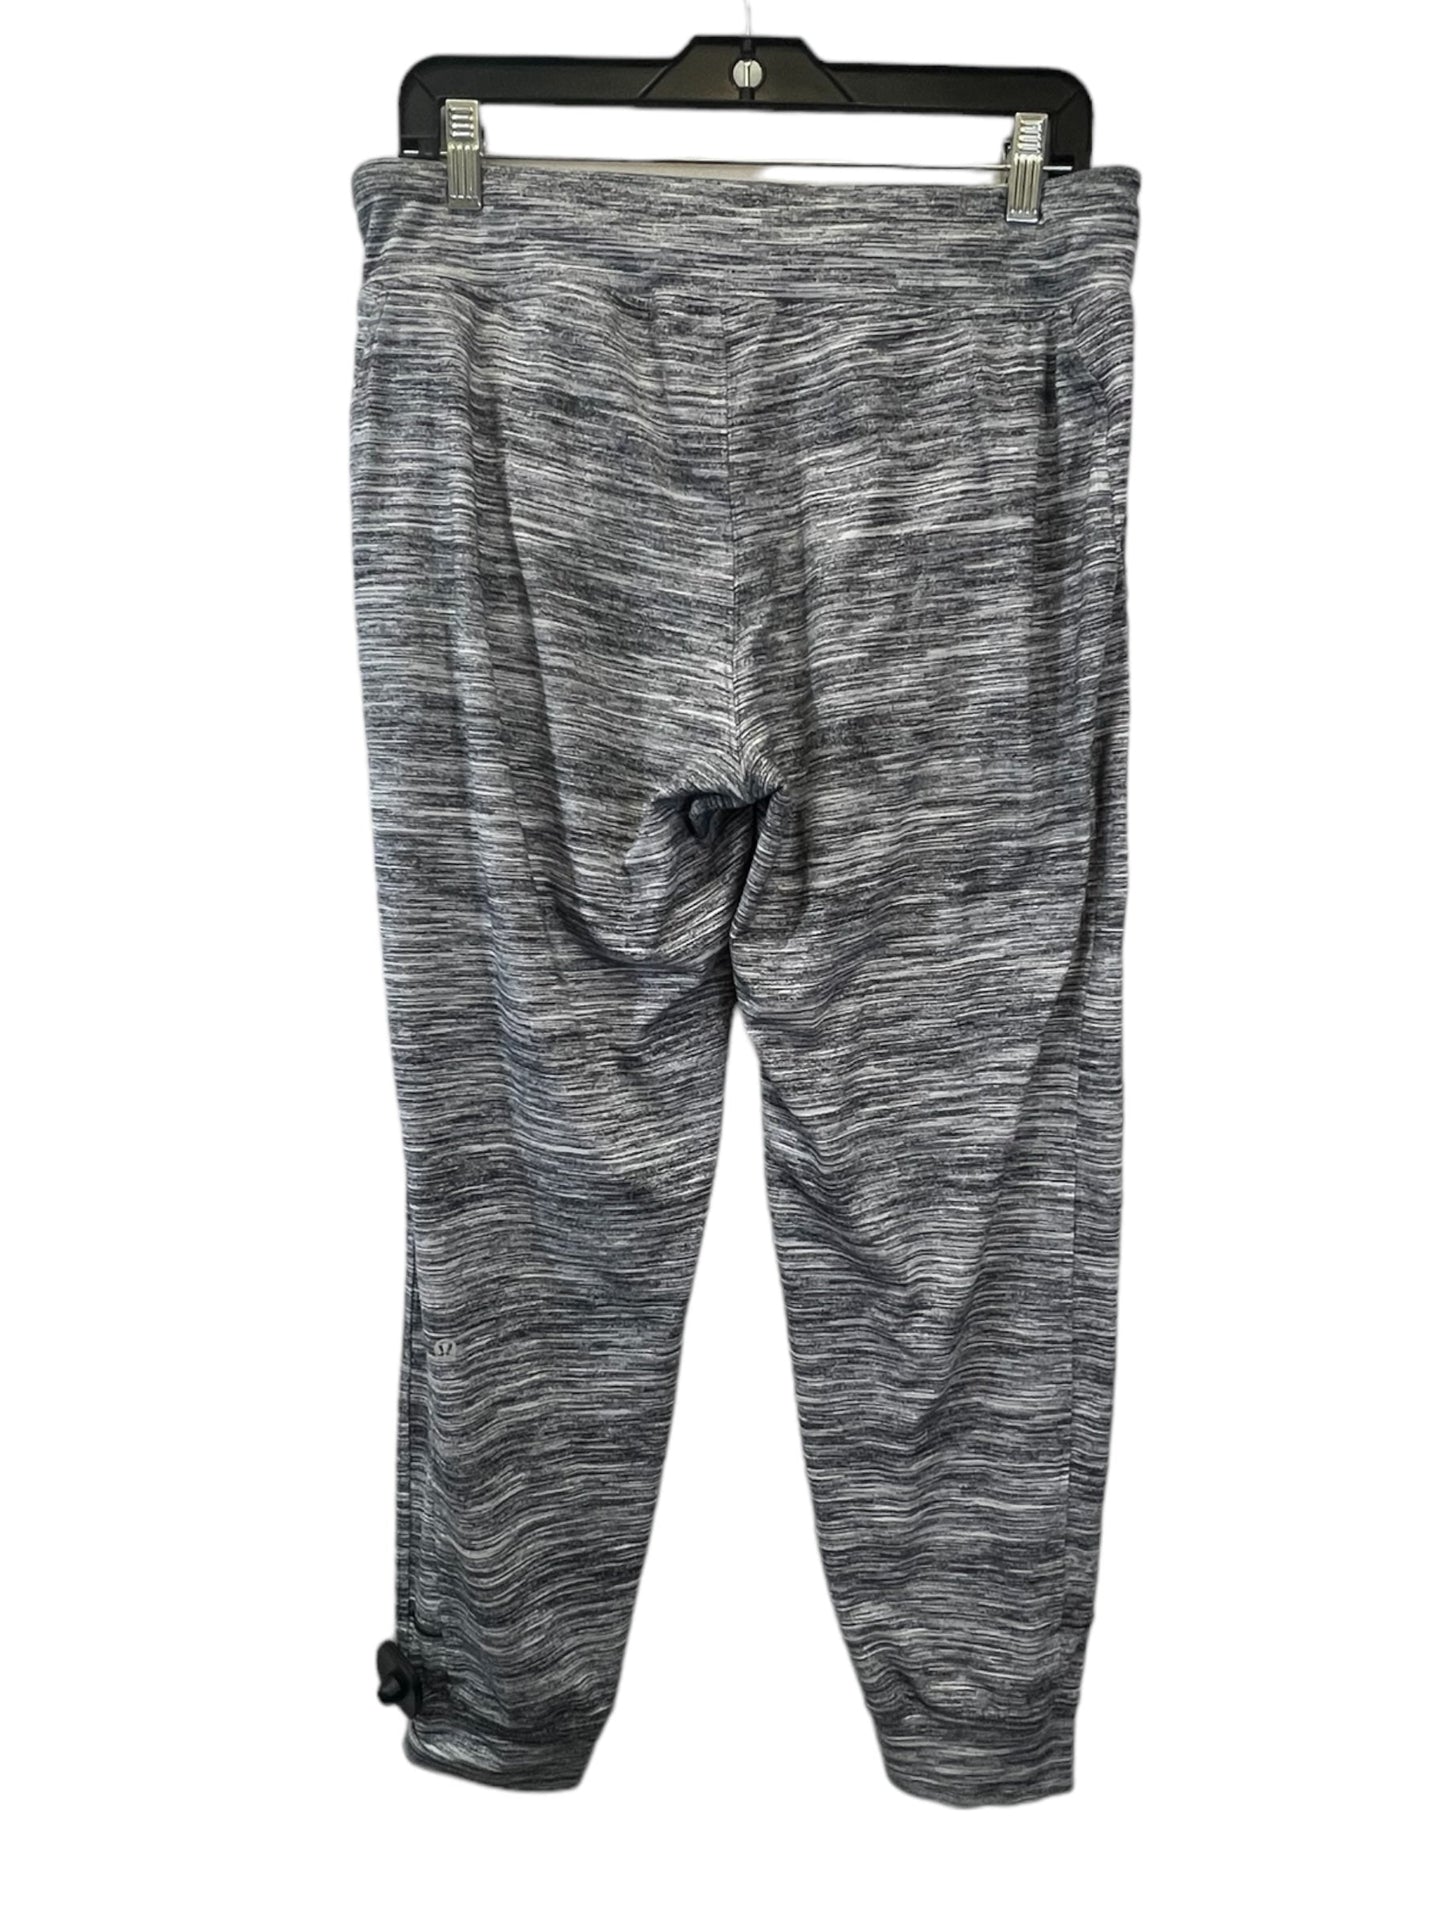 Grey & Silver Athletic Pants Lululemon, Size M